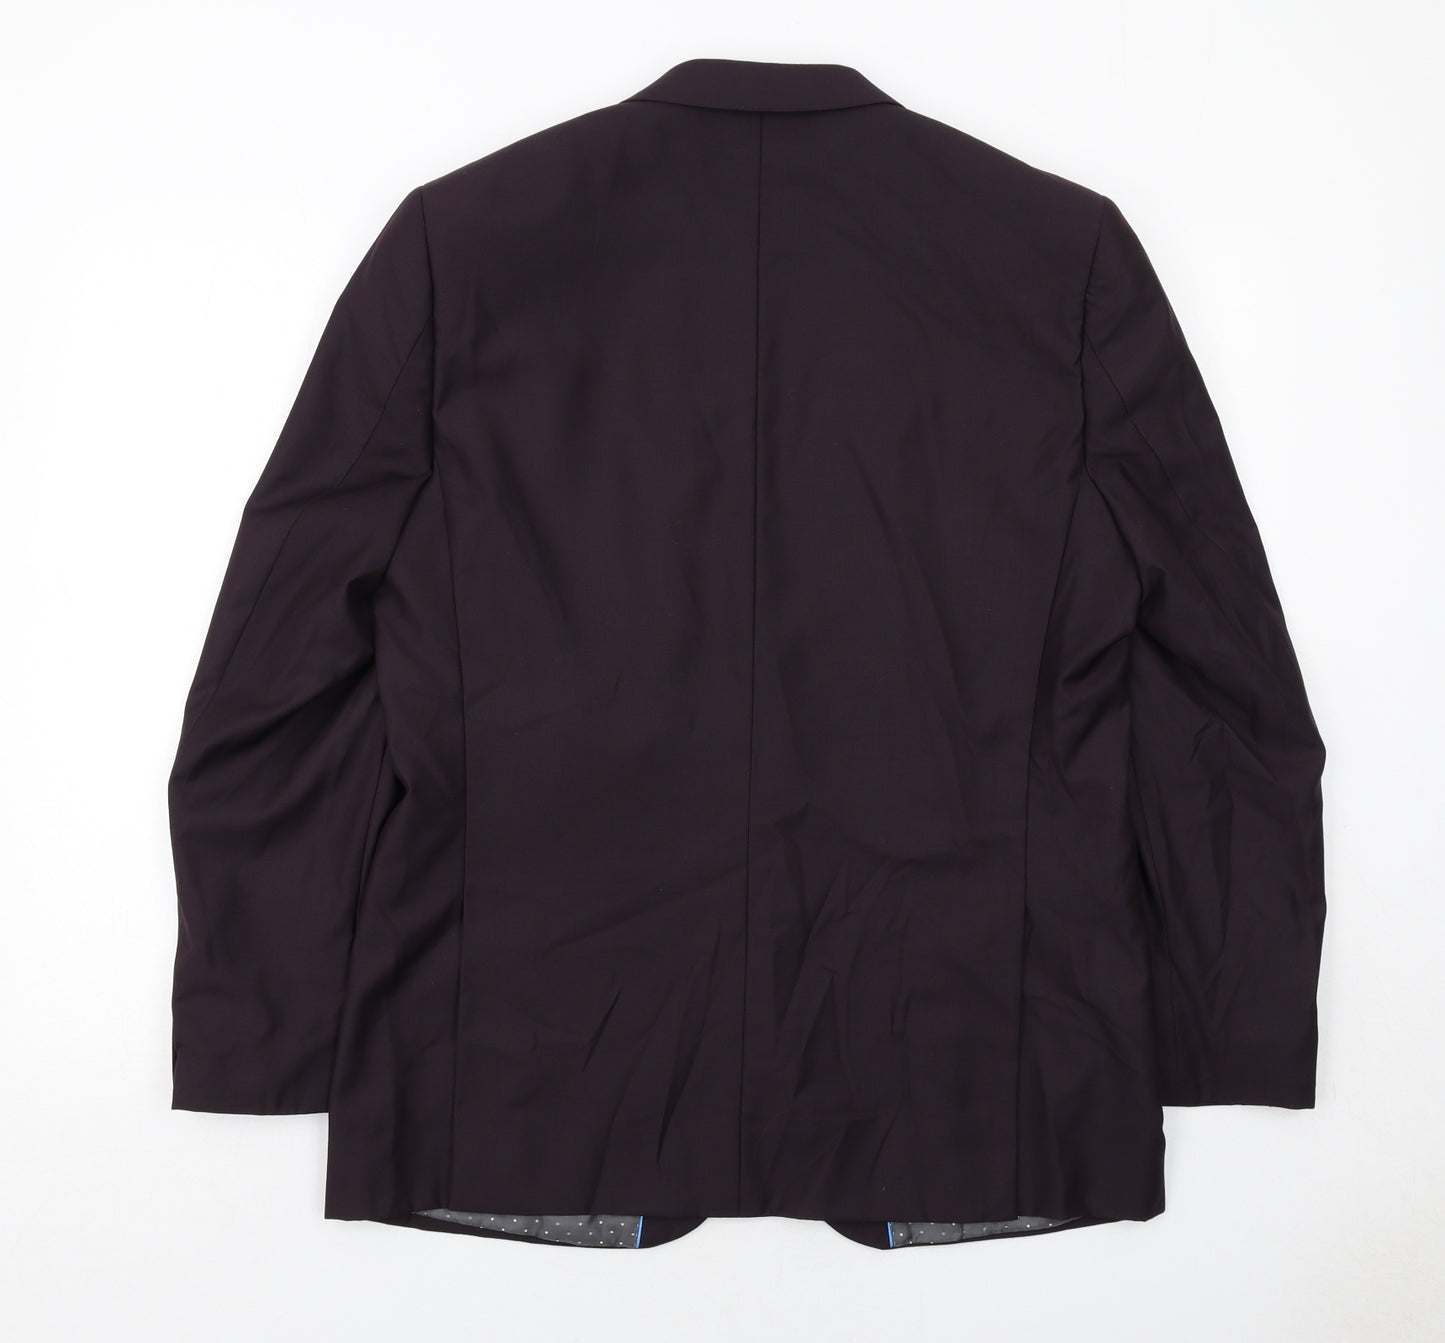 Woolworths Mens Purple Polyester Jacket Suit Jacket Size 42 Regular